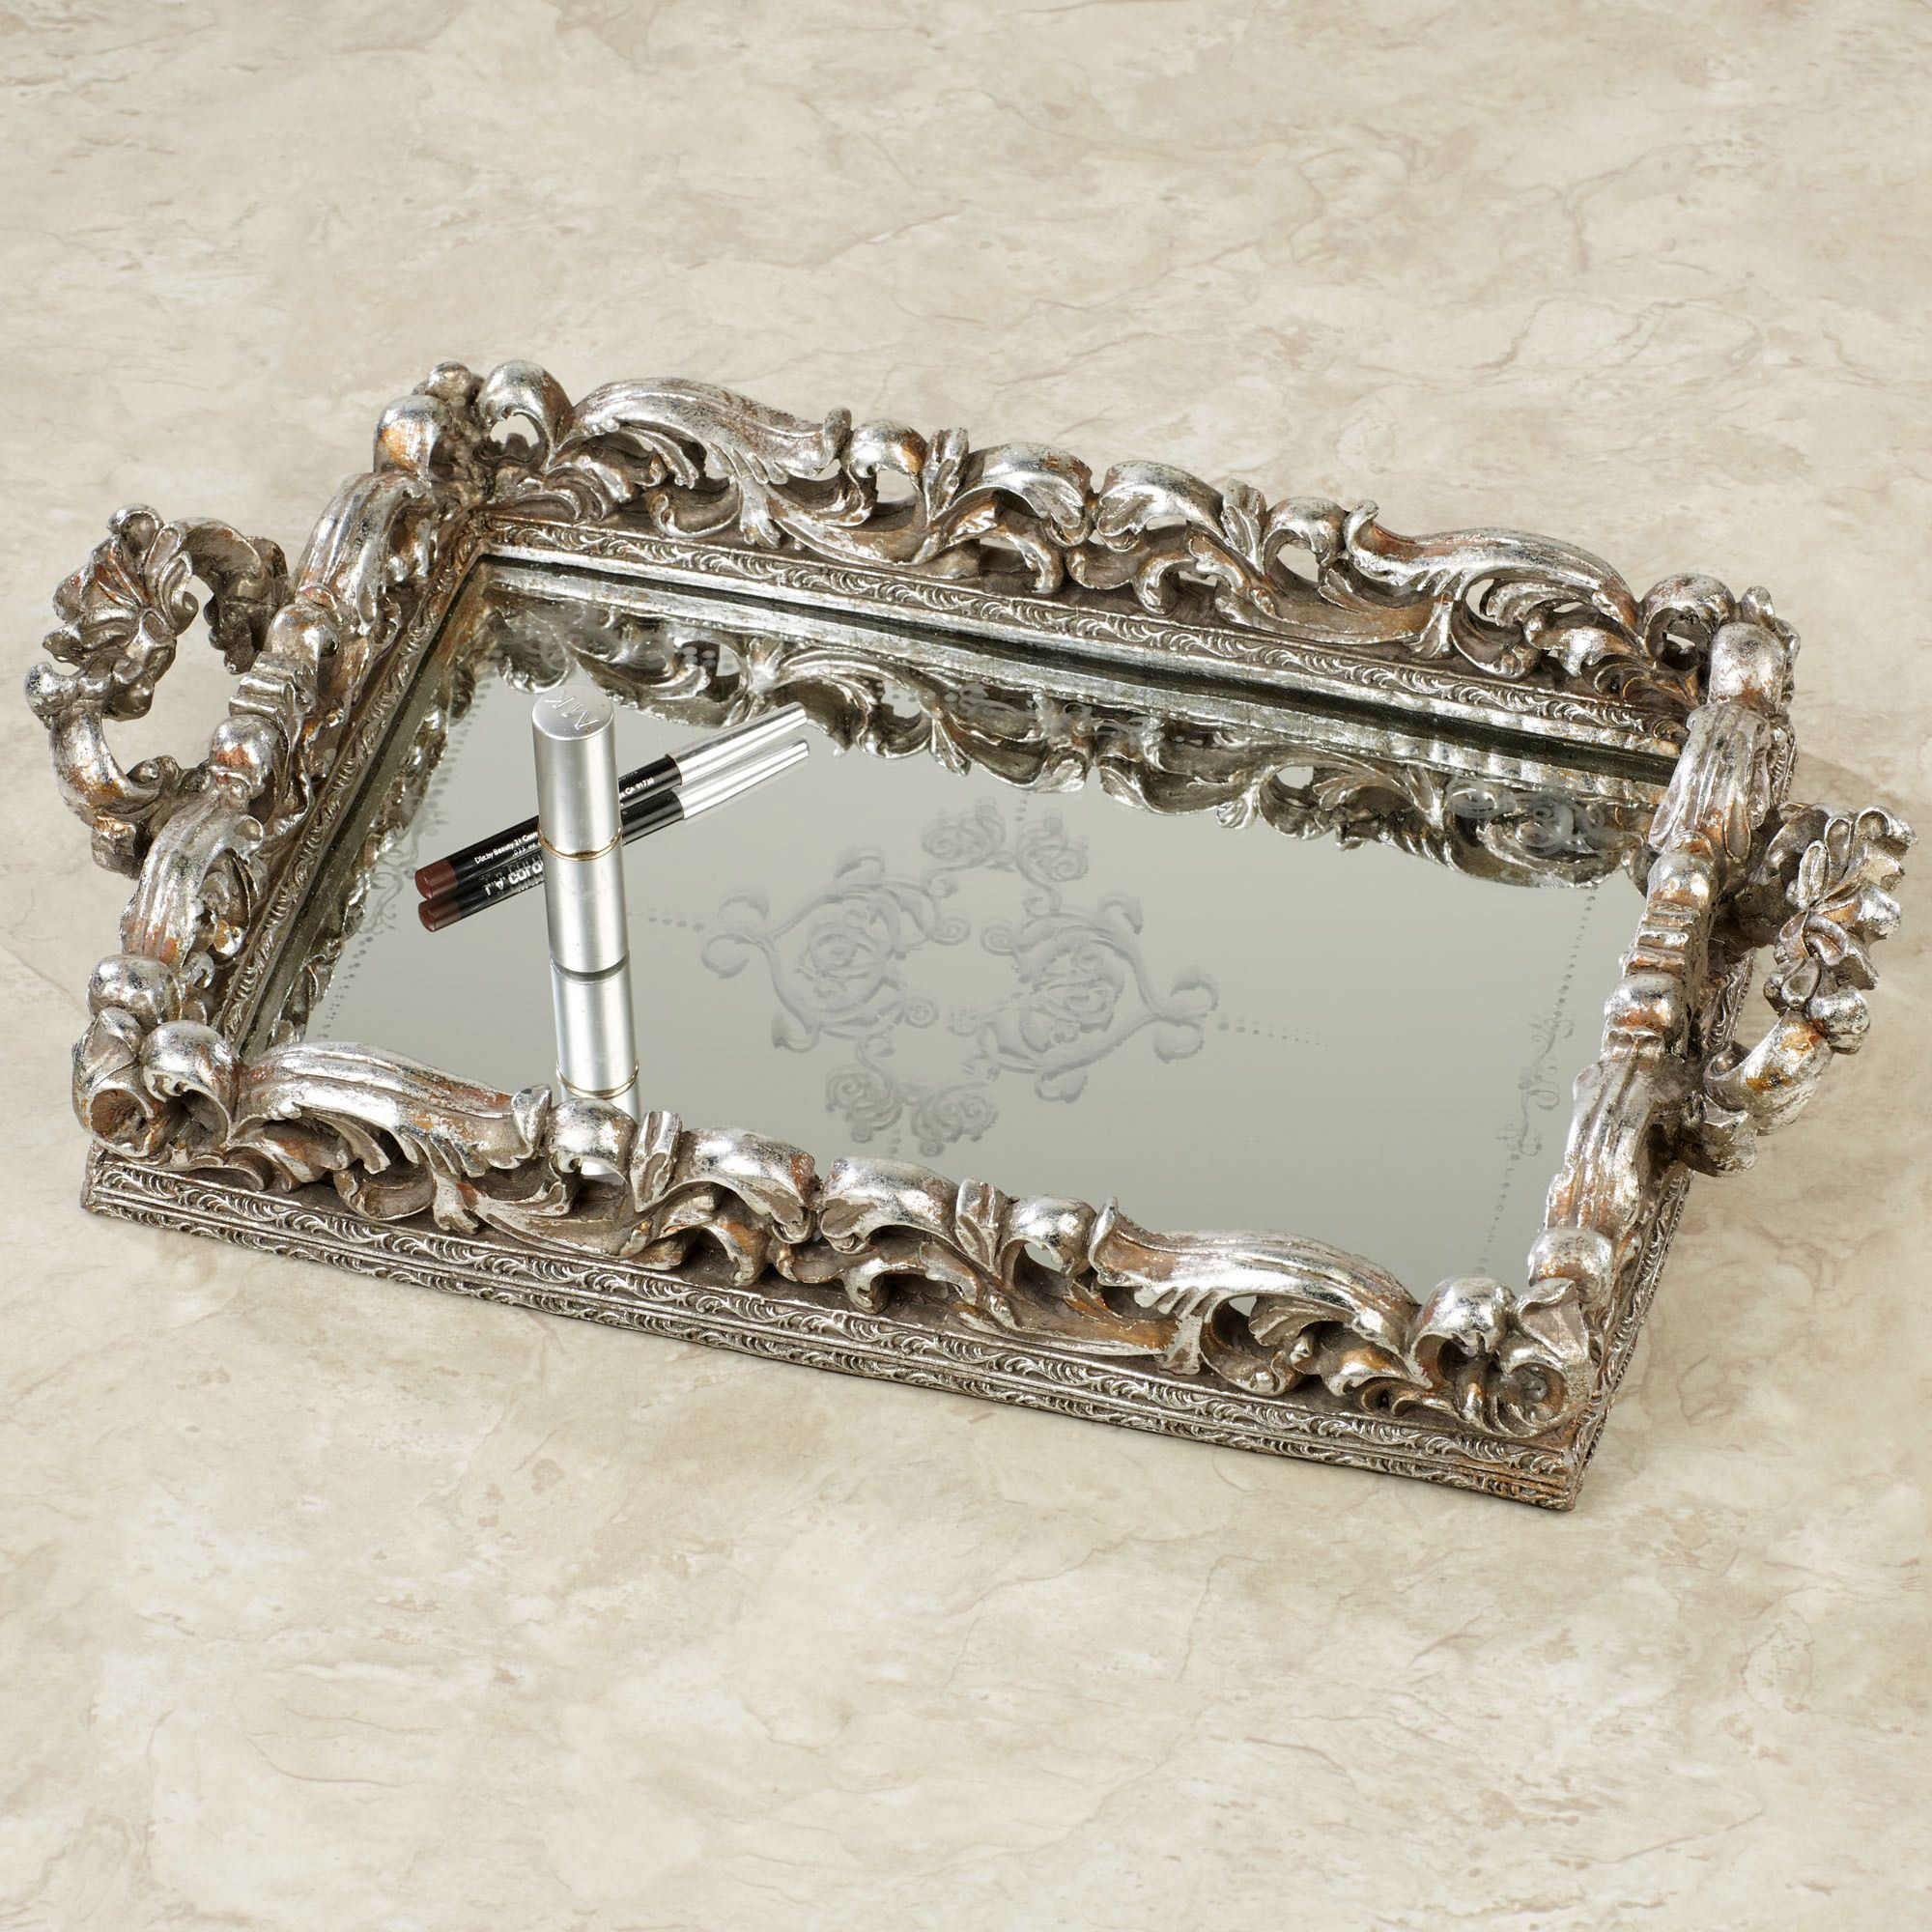 Mirrored Bathroom Tray
 Elaine Antique Silver Mirrored Vanity Tray